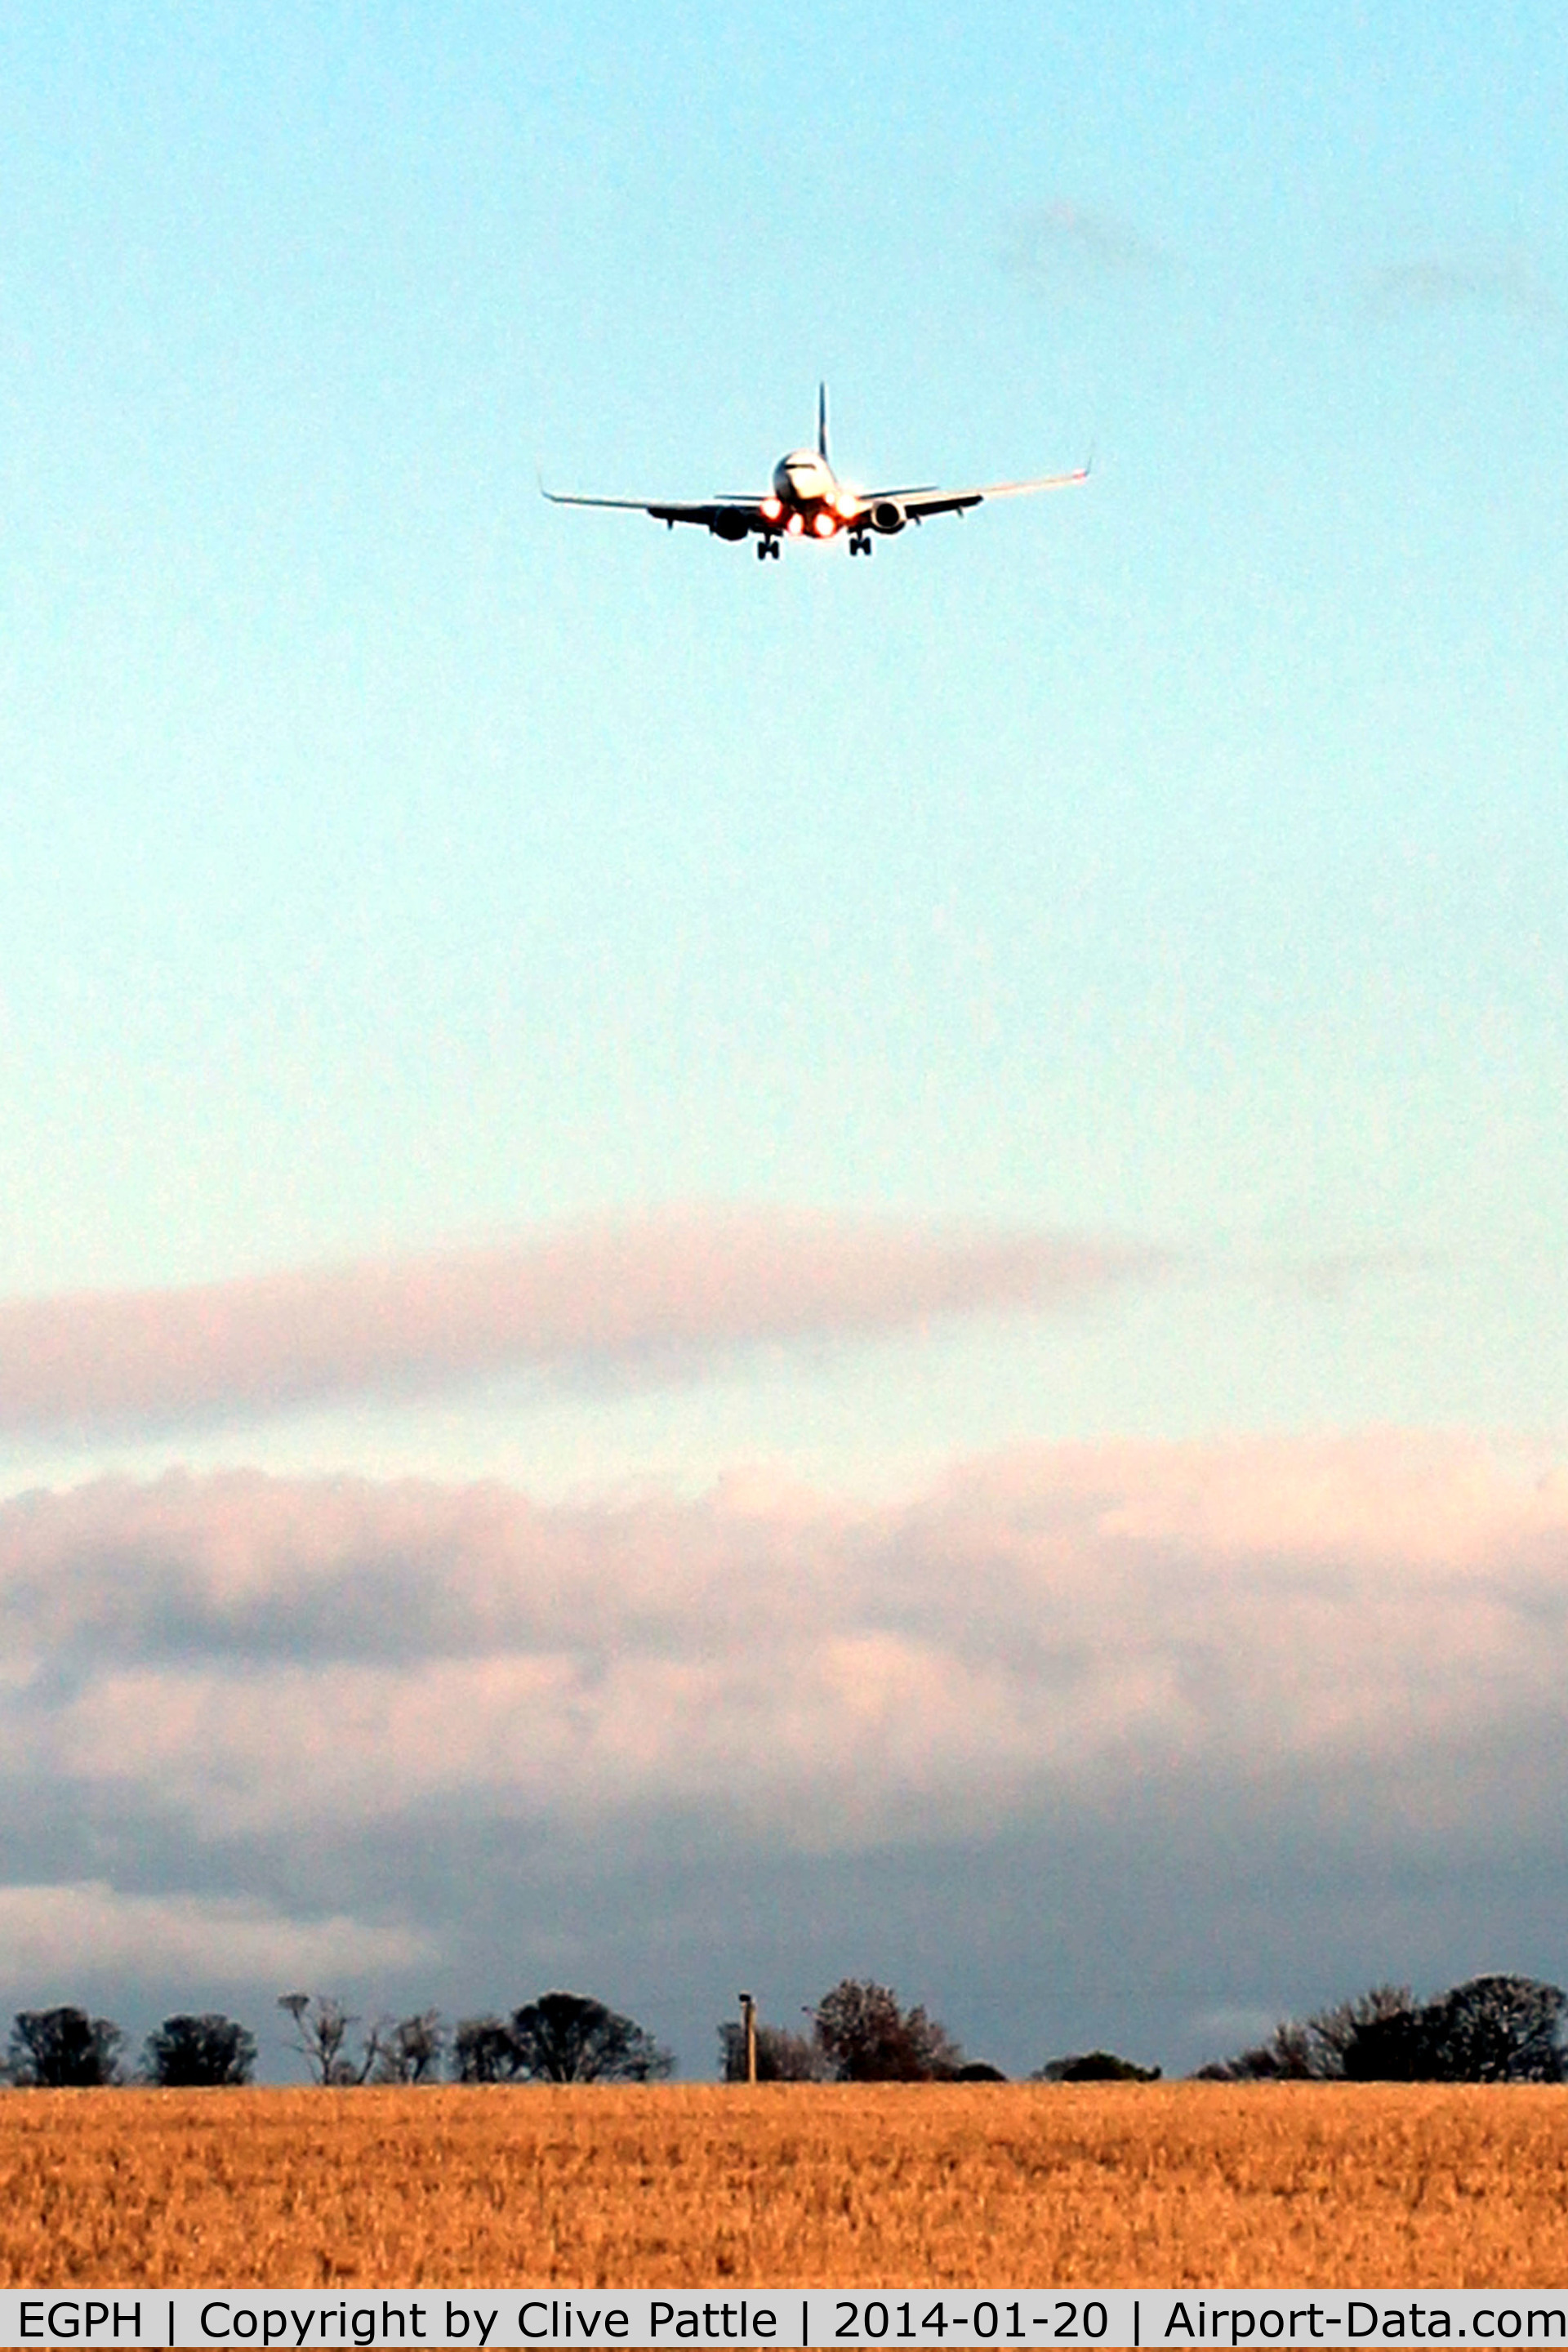 Edinburgh Airport, Edinburgh, Scotland United Kingdom (EGPH) - A landing shot taken from the Railway Bridge viewing area on the north side of the airport